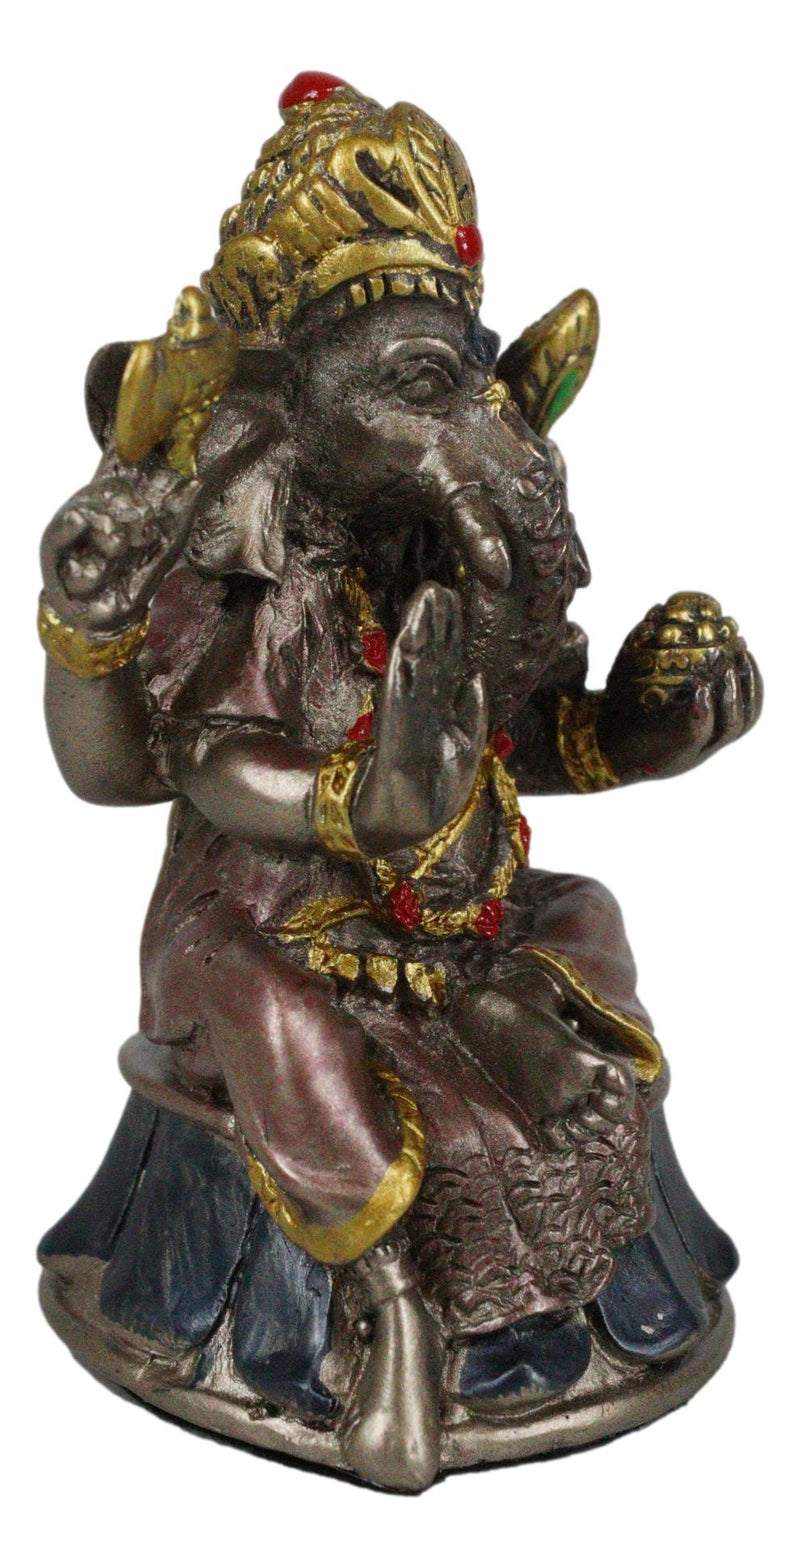 Small Hindu Ganesha Ganapati Hindu Elephant God Sitting On Drum Figurine